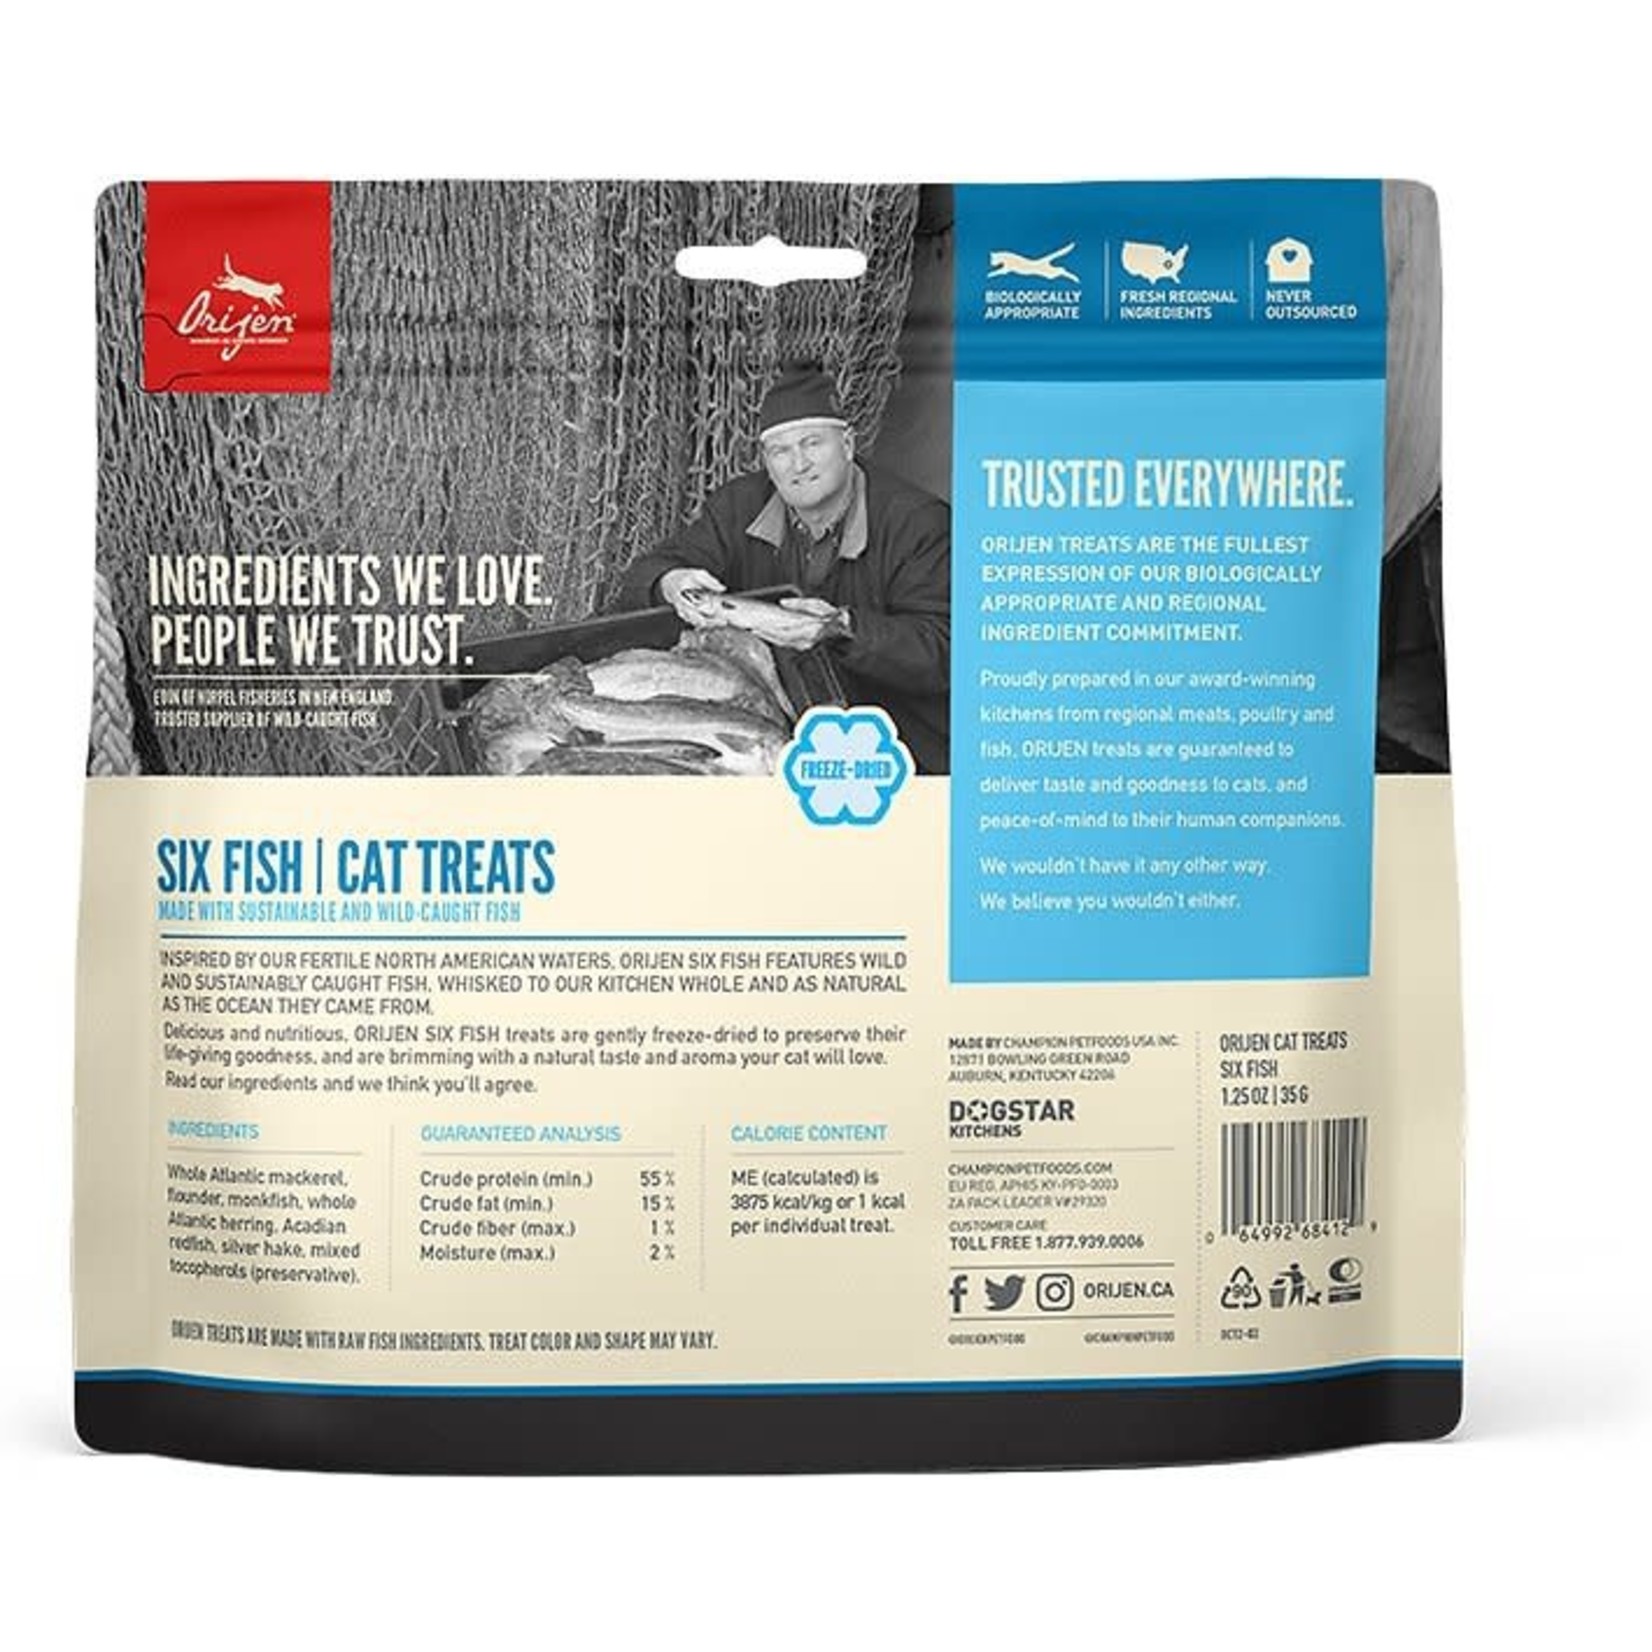 Orijen ORIJEN Six Fish Grain-Free Freeze-Dried Cat Treats 1.25oz